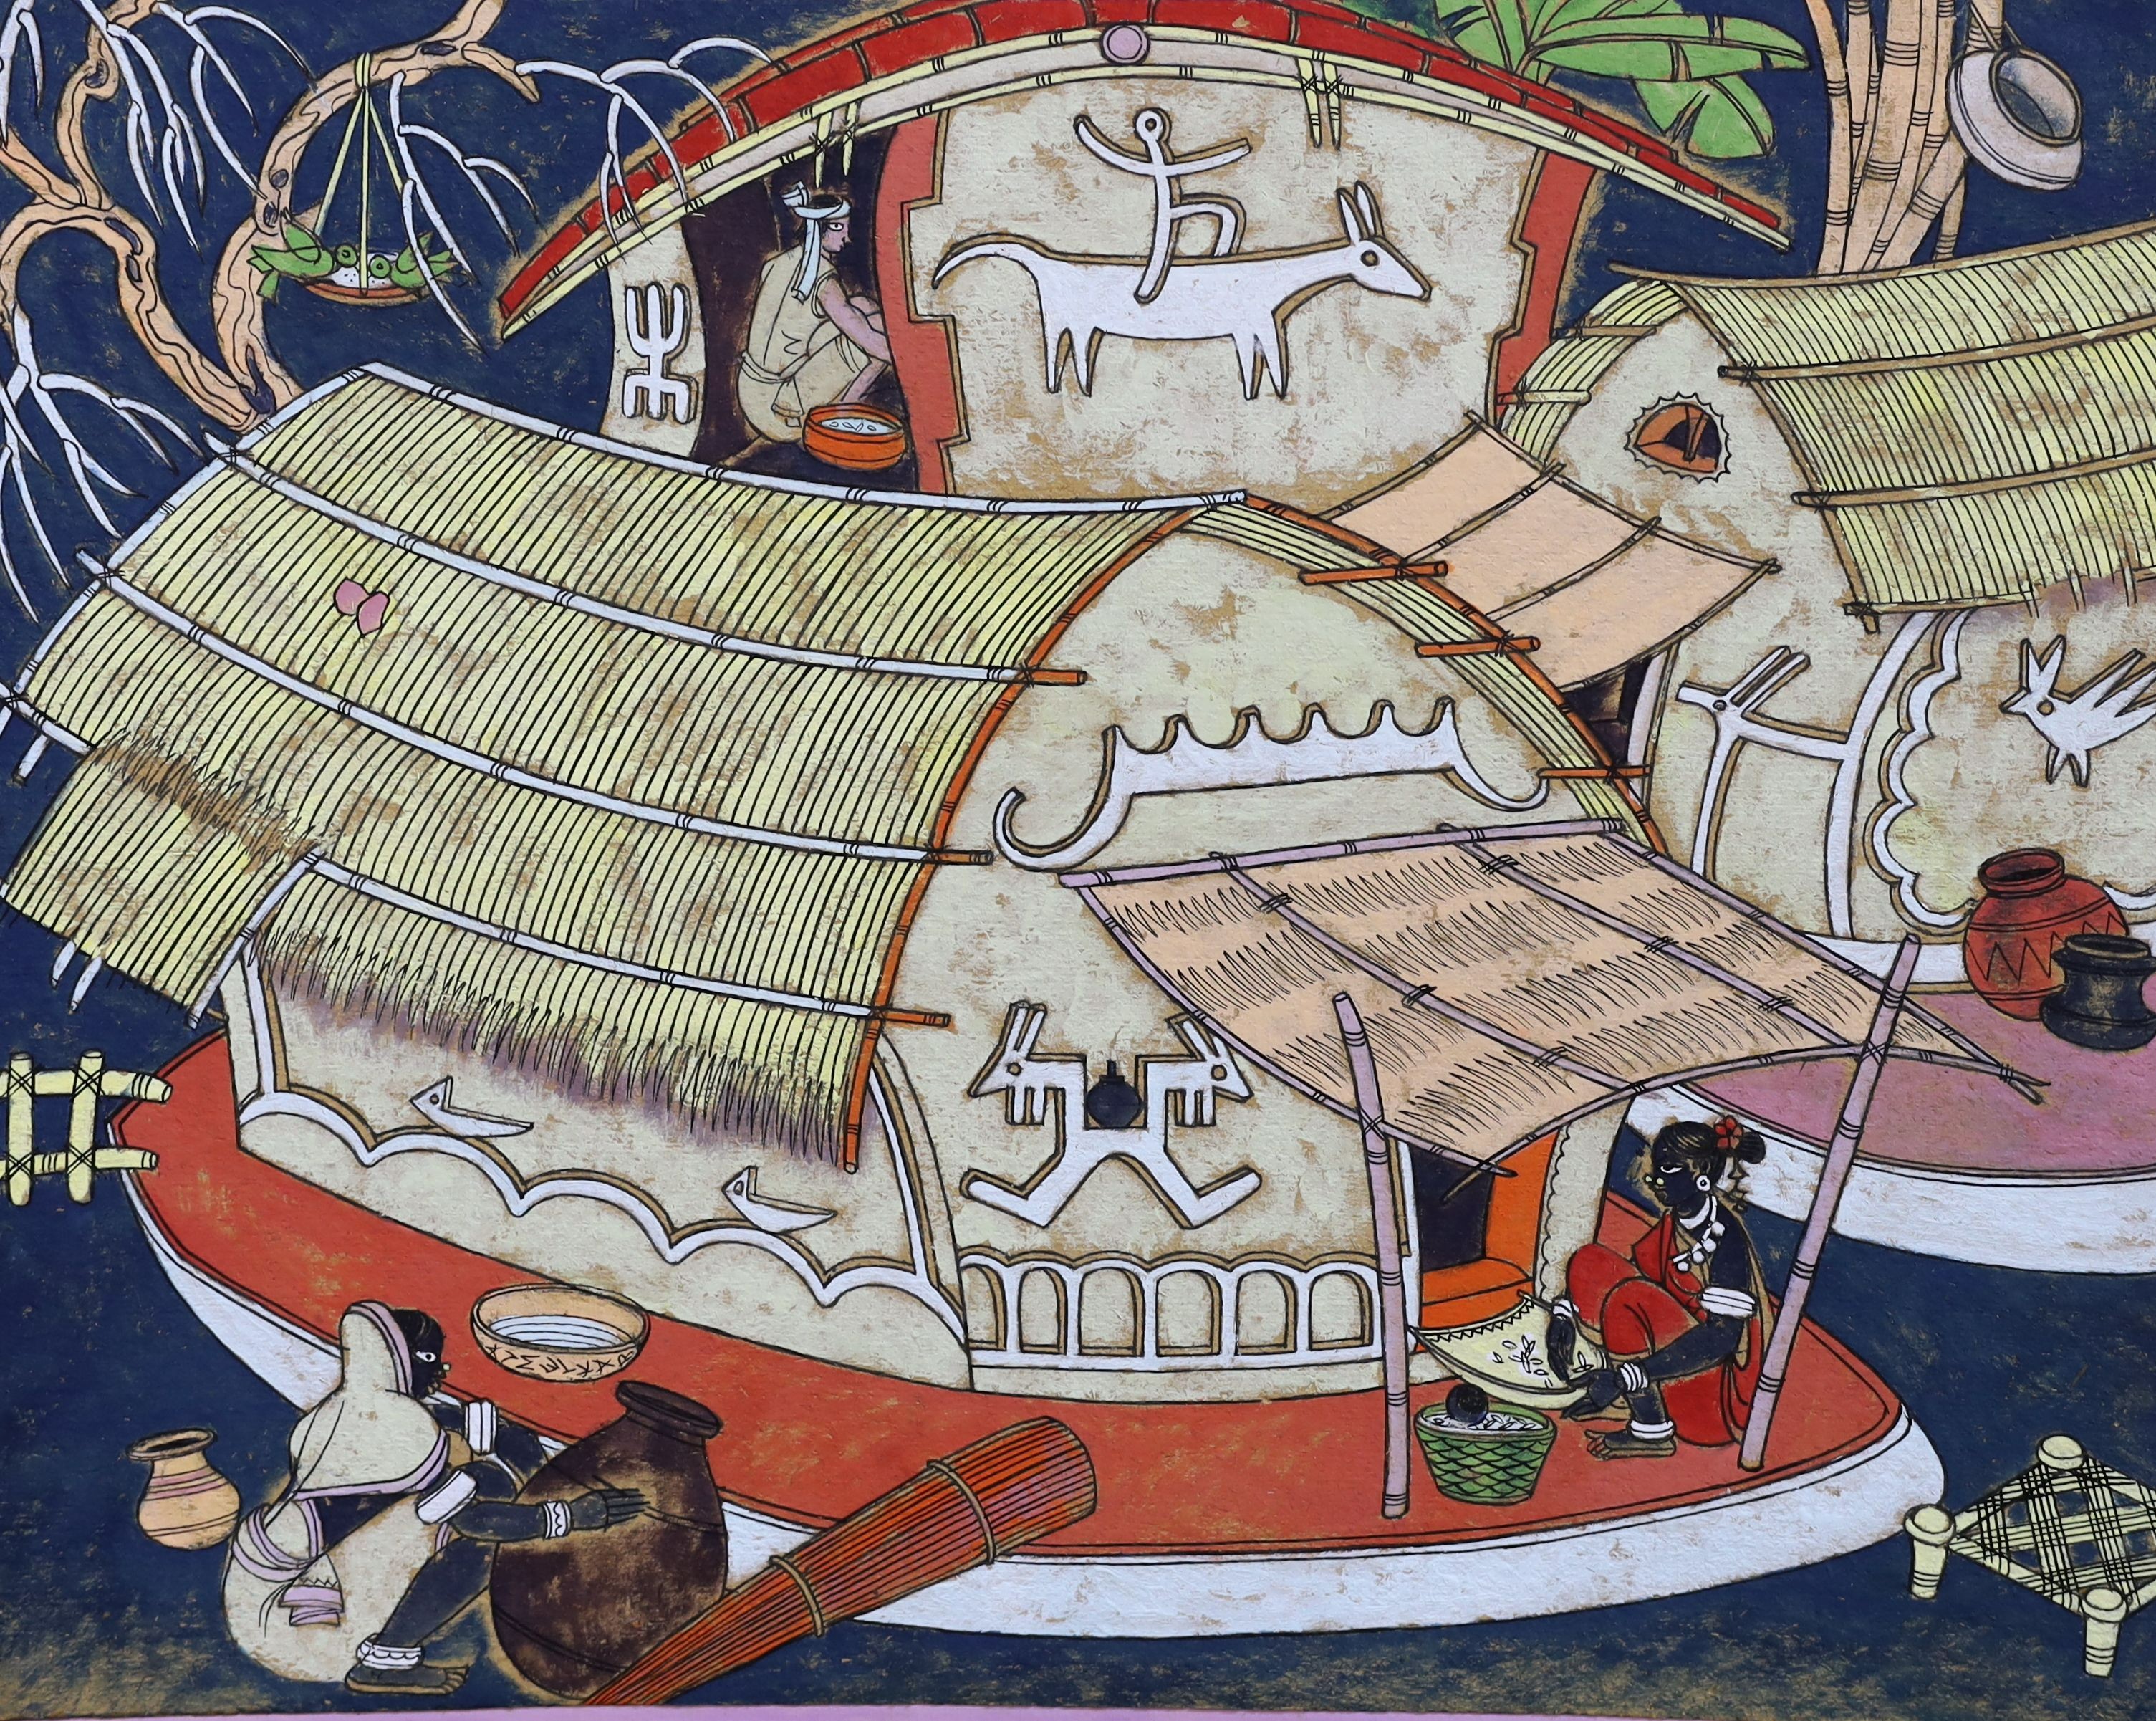 Abdulrahim Appabhai Almelkar (Indian, 1920-1982), 'Village', ink and watercolour on paper, 40 x 50cm